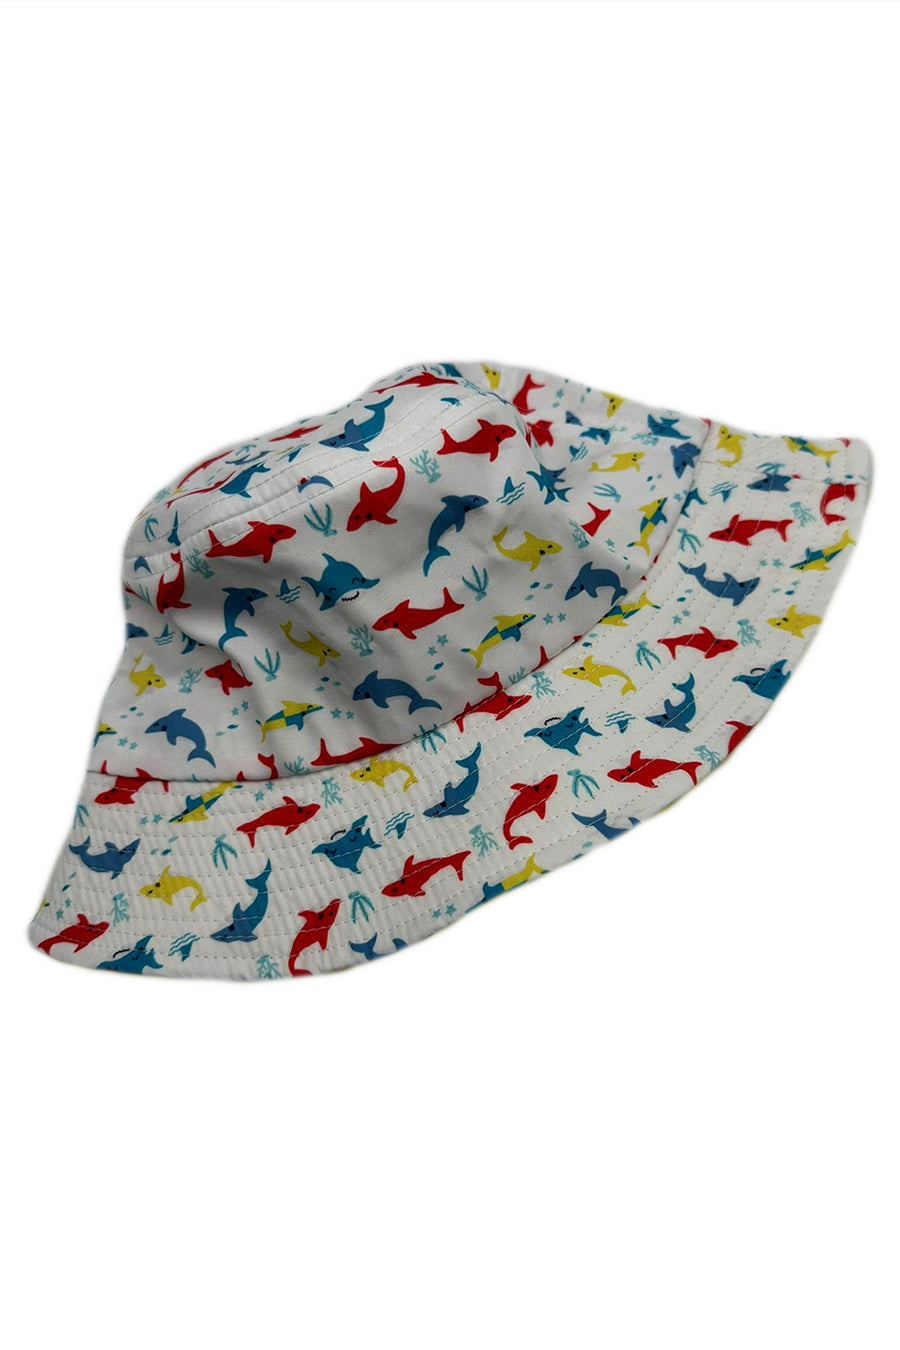 Kids Sun Hat Breathable Bucket Hat Summer Play Hat, Shark